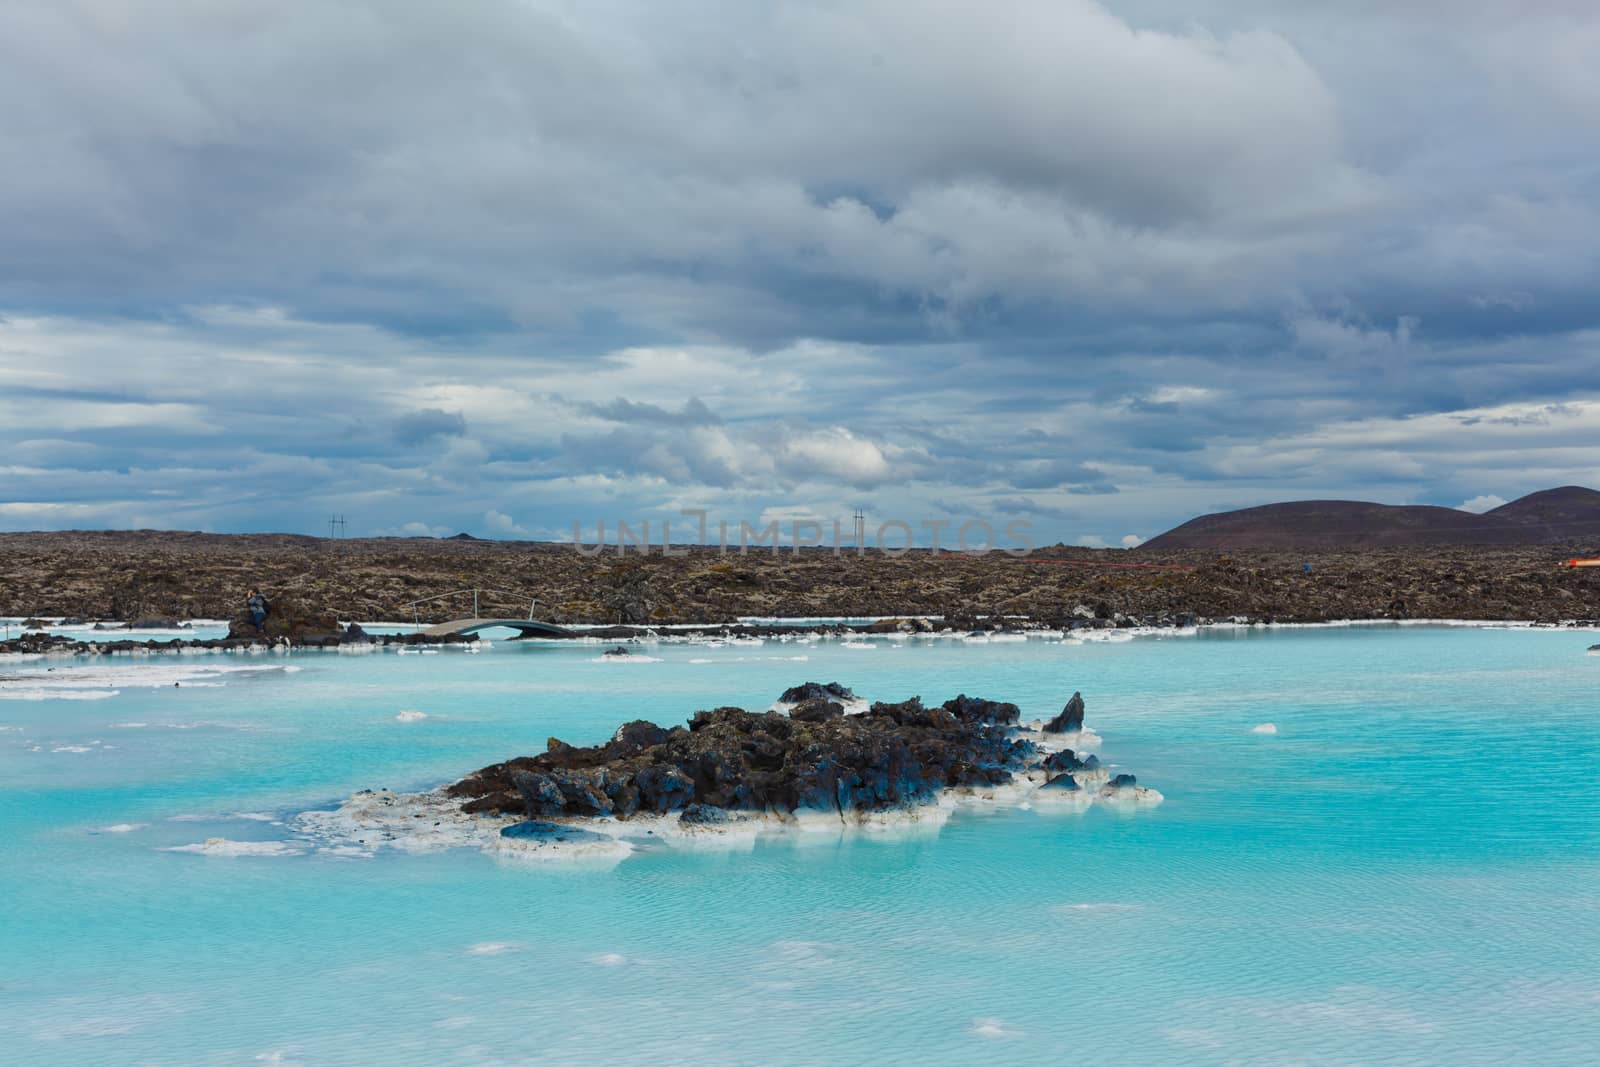 The famous blue lagoon geothermal bath near Reykjavik, Iceland